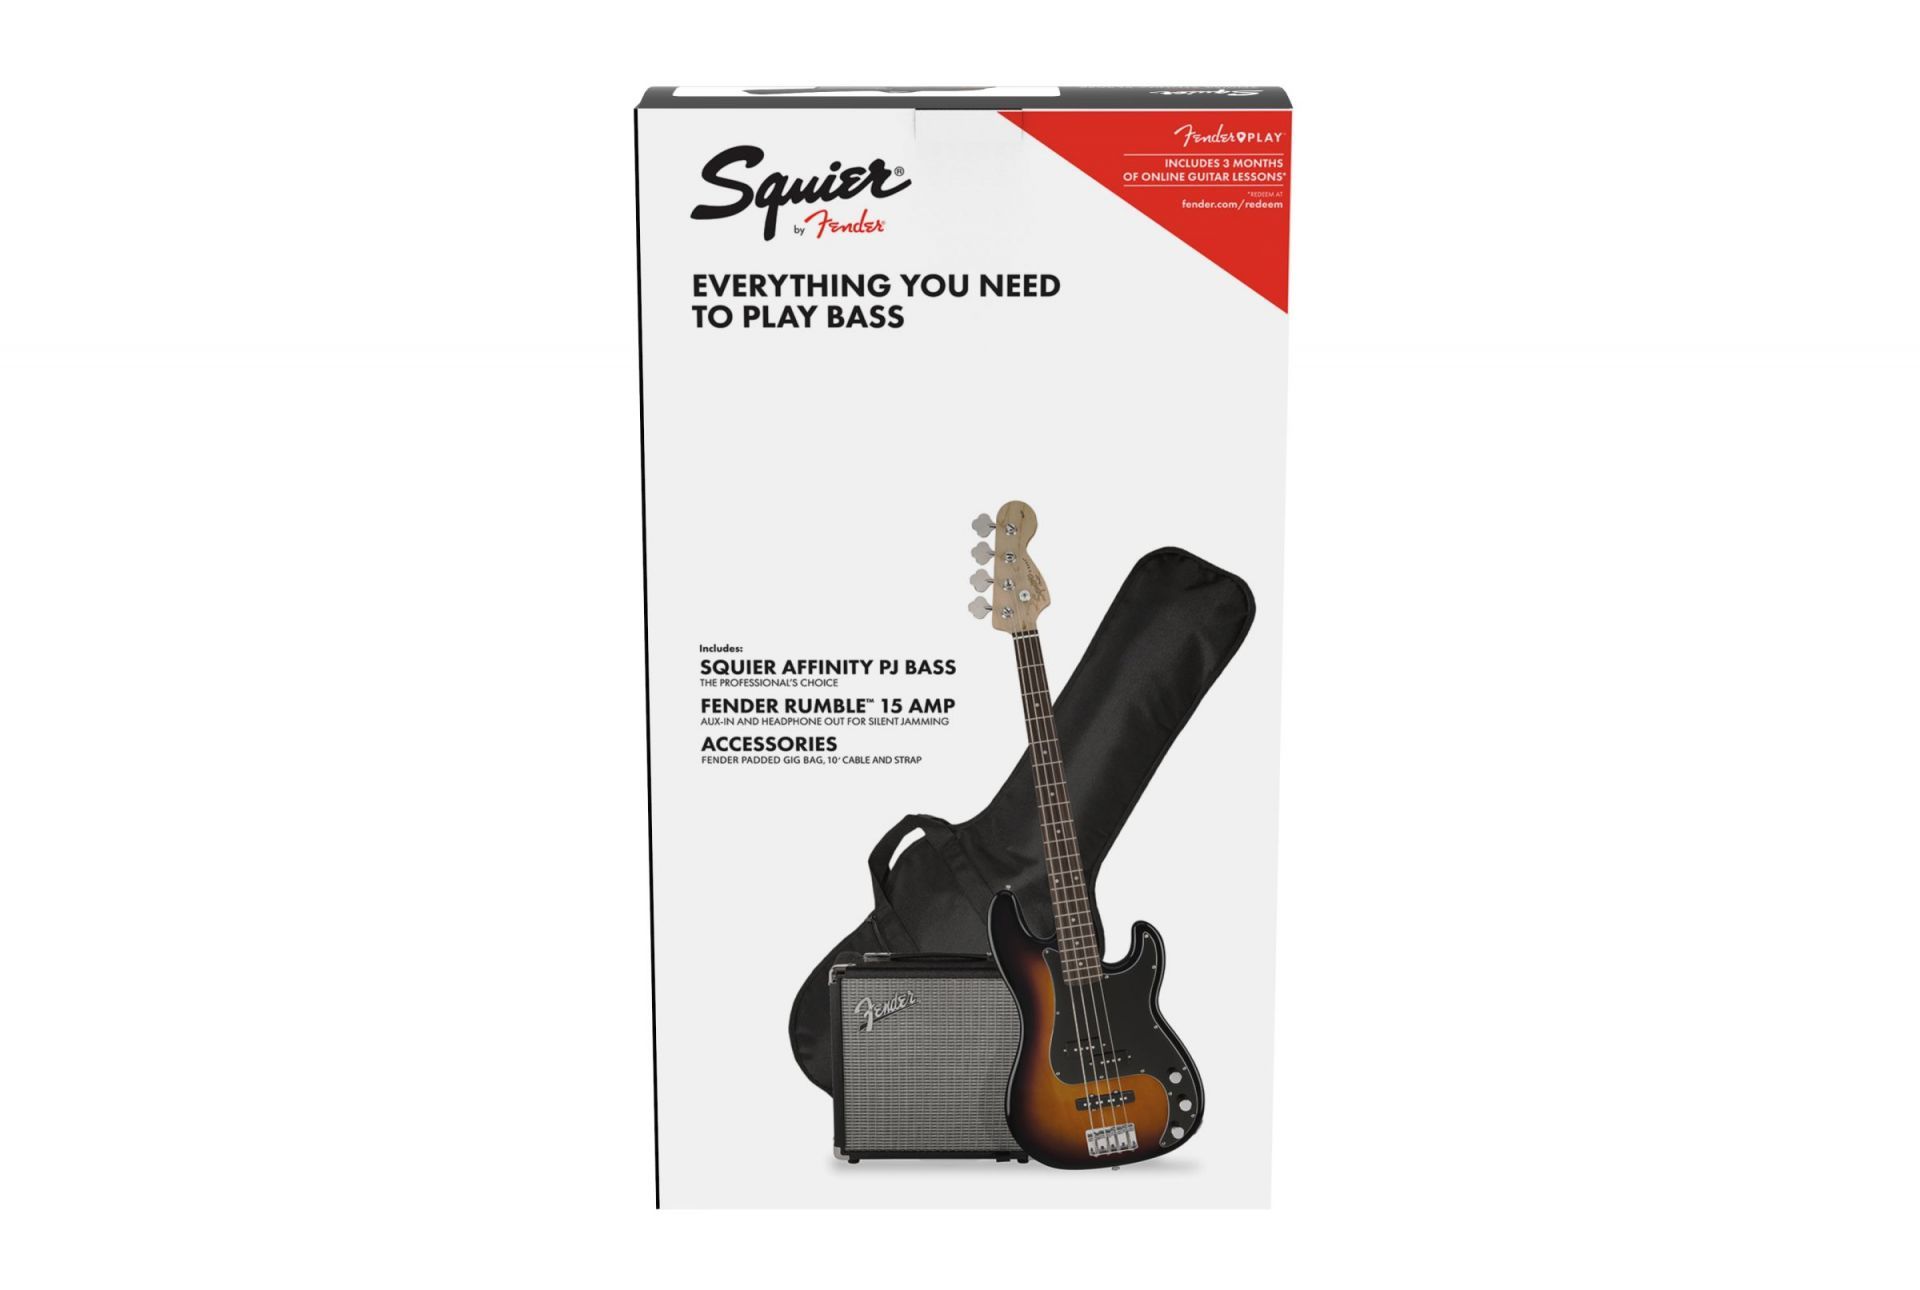 Fender Squier Affinity Series Precision Bass PJ Pack IL Brown Sunburst